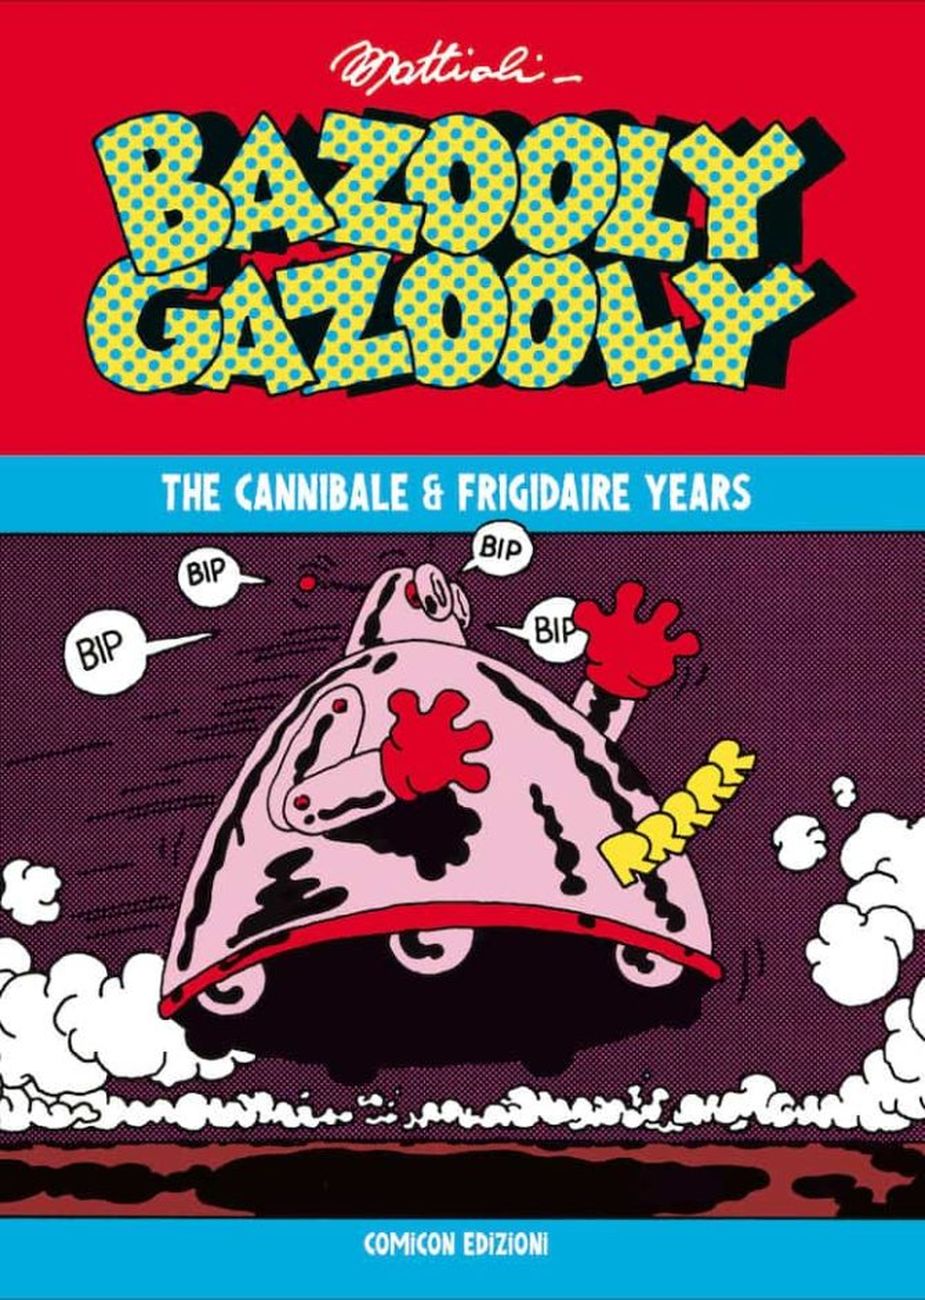 Massimo Mattioli - Bazooly Gazooly. The Cannibale & Frigidaire years (Comicon Edizioni, 2019)